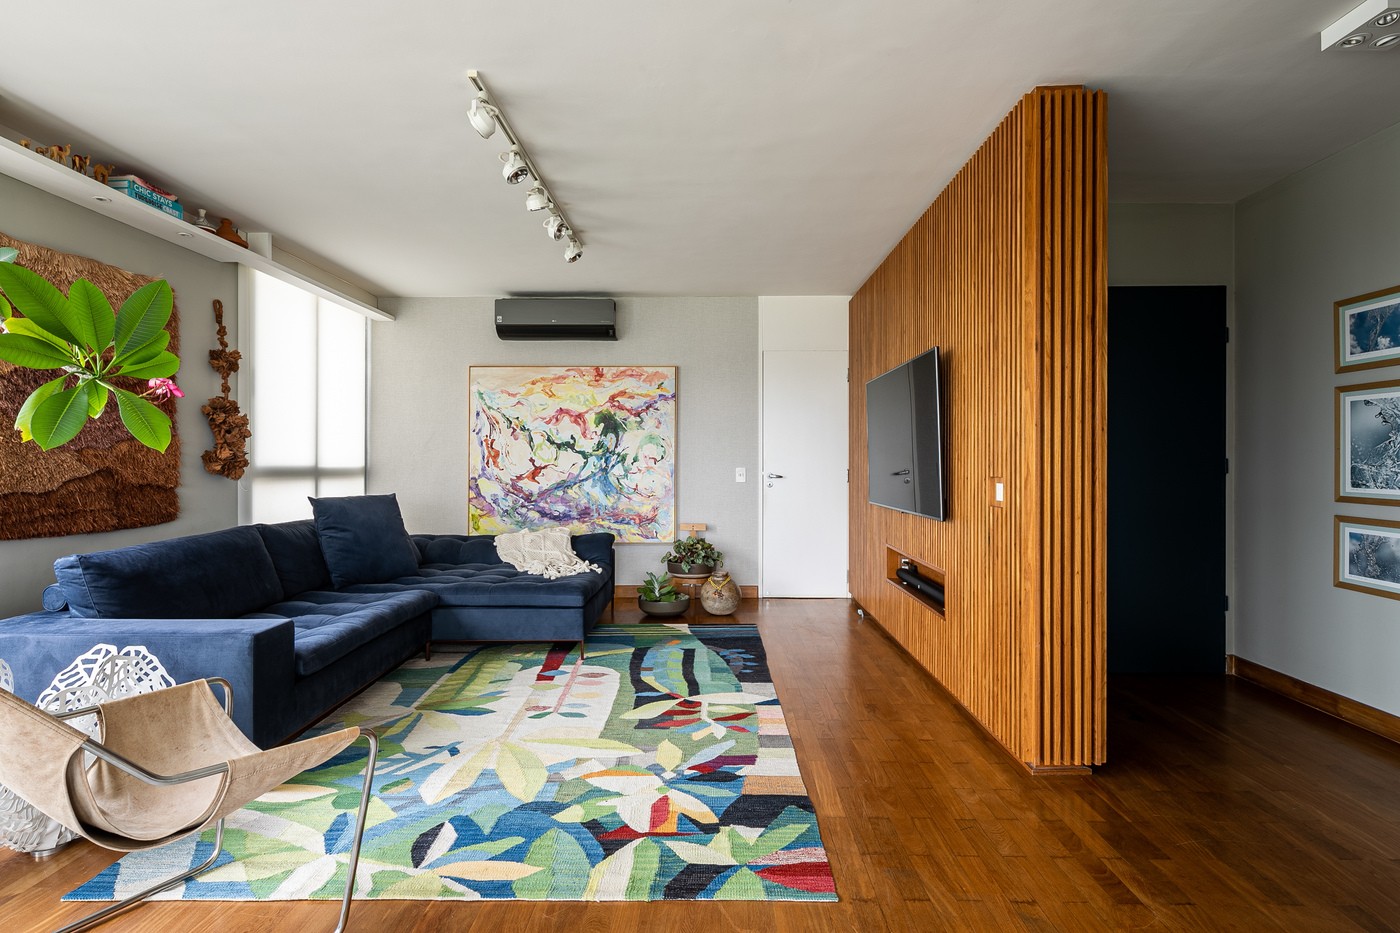 Décor do dia: tapetes e obras de arte deixam sala de estar colorida (Foto: Pedro Mascaro)